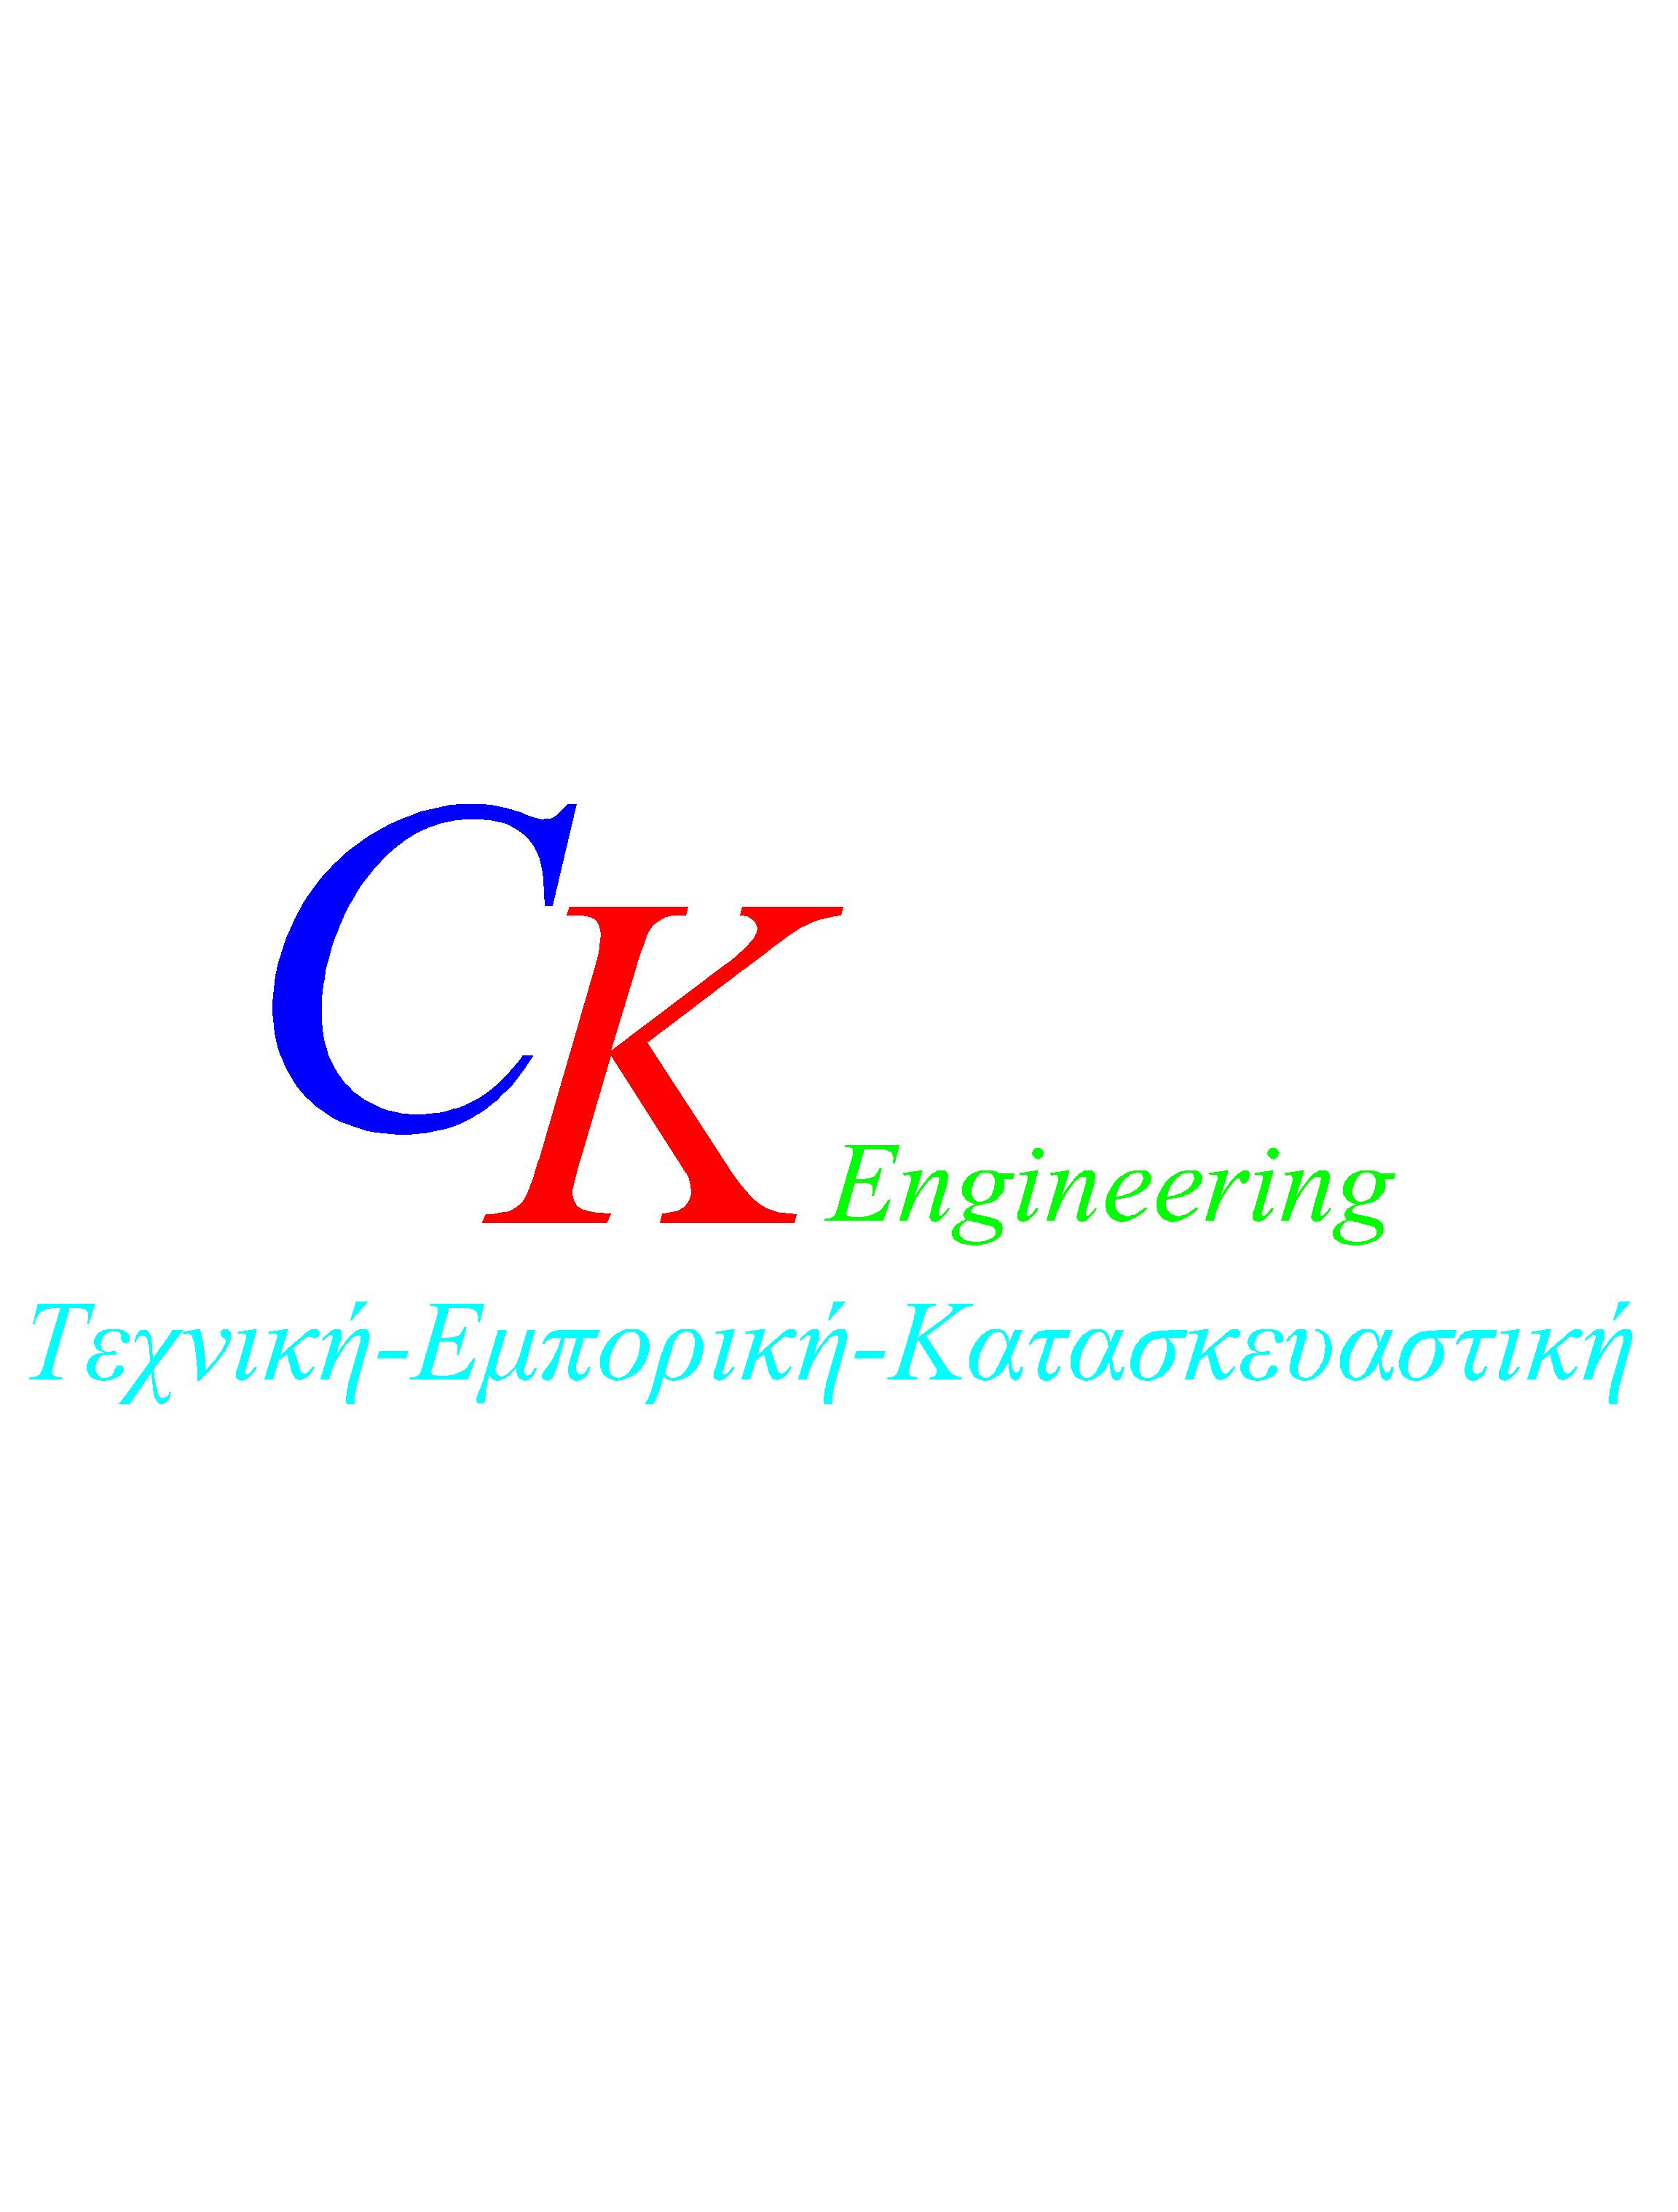 CK Engineering